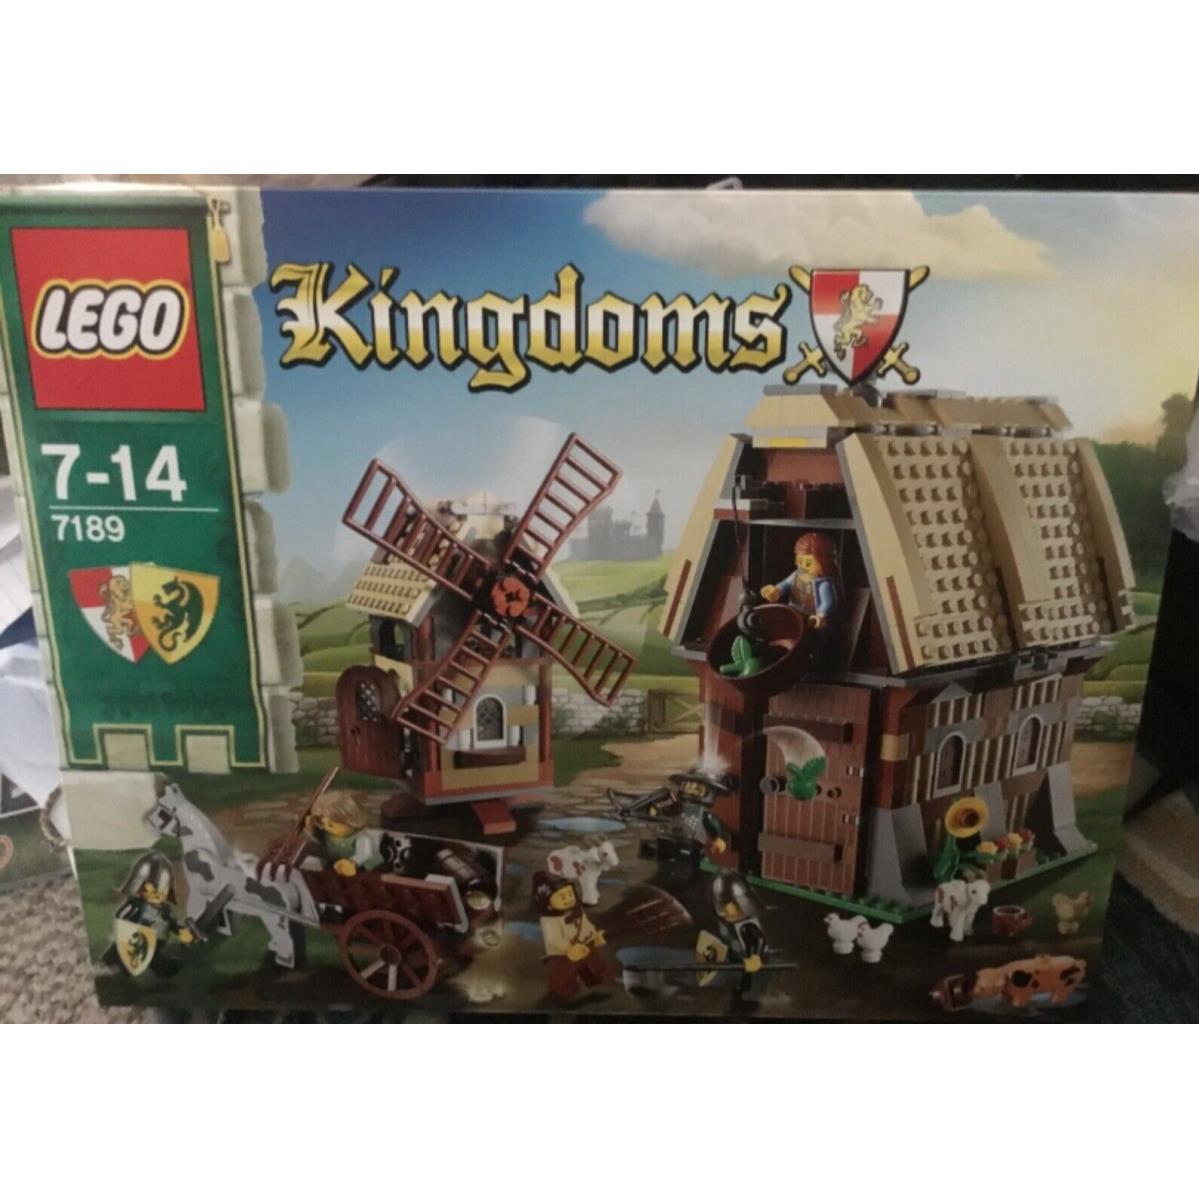 Lego Kingdom s Mill Village Raid Brand-new/sealed 7189 Rare/vintage